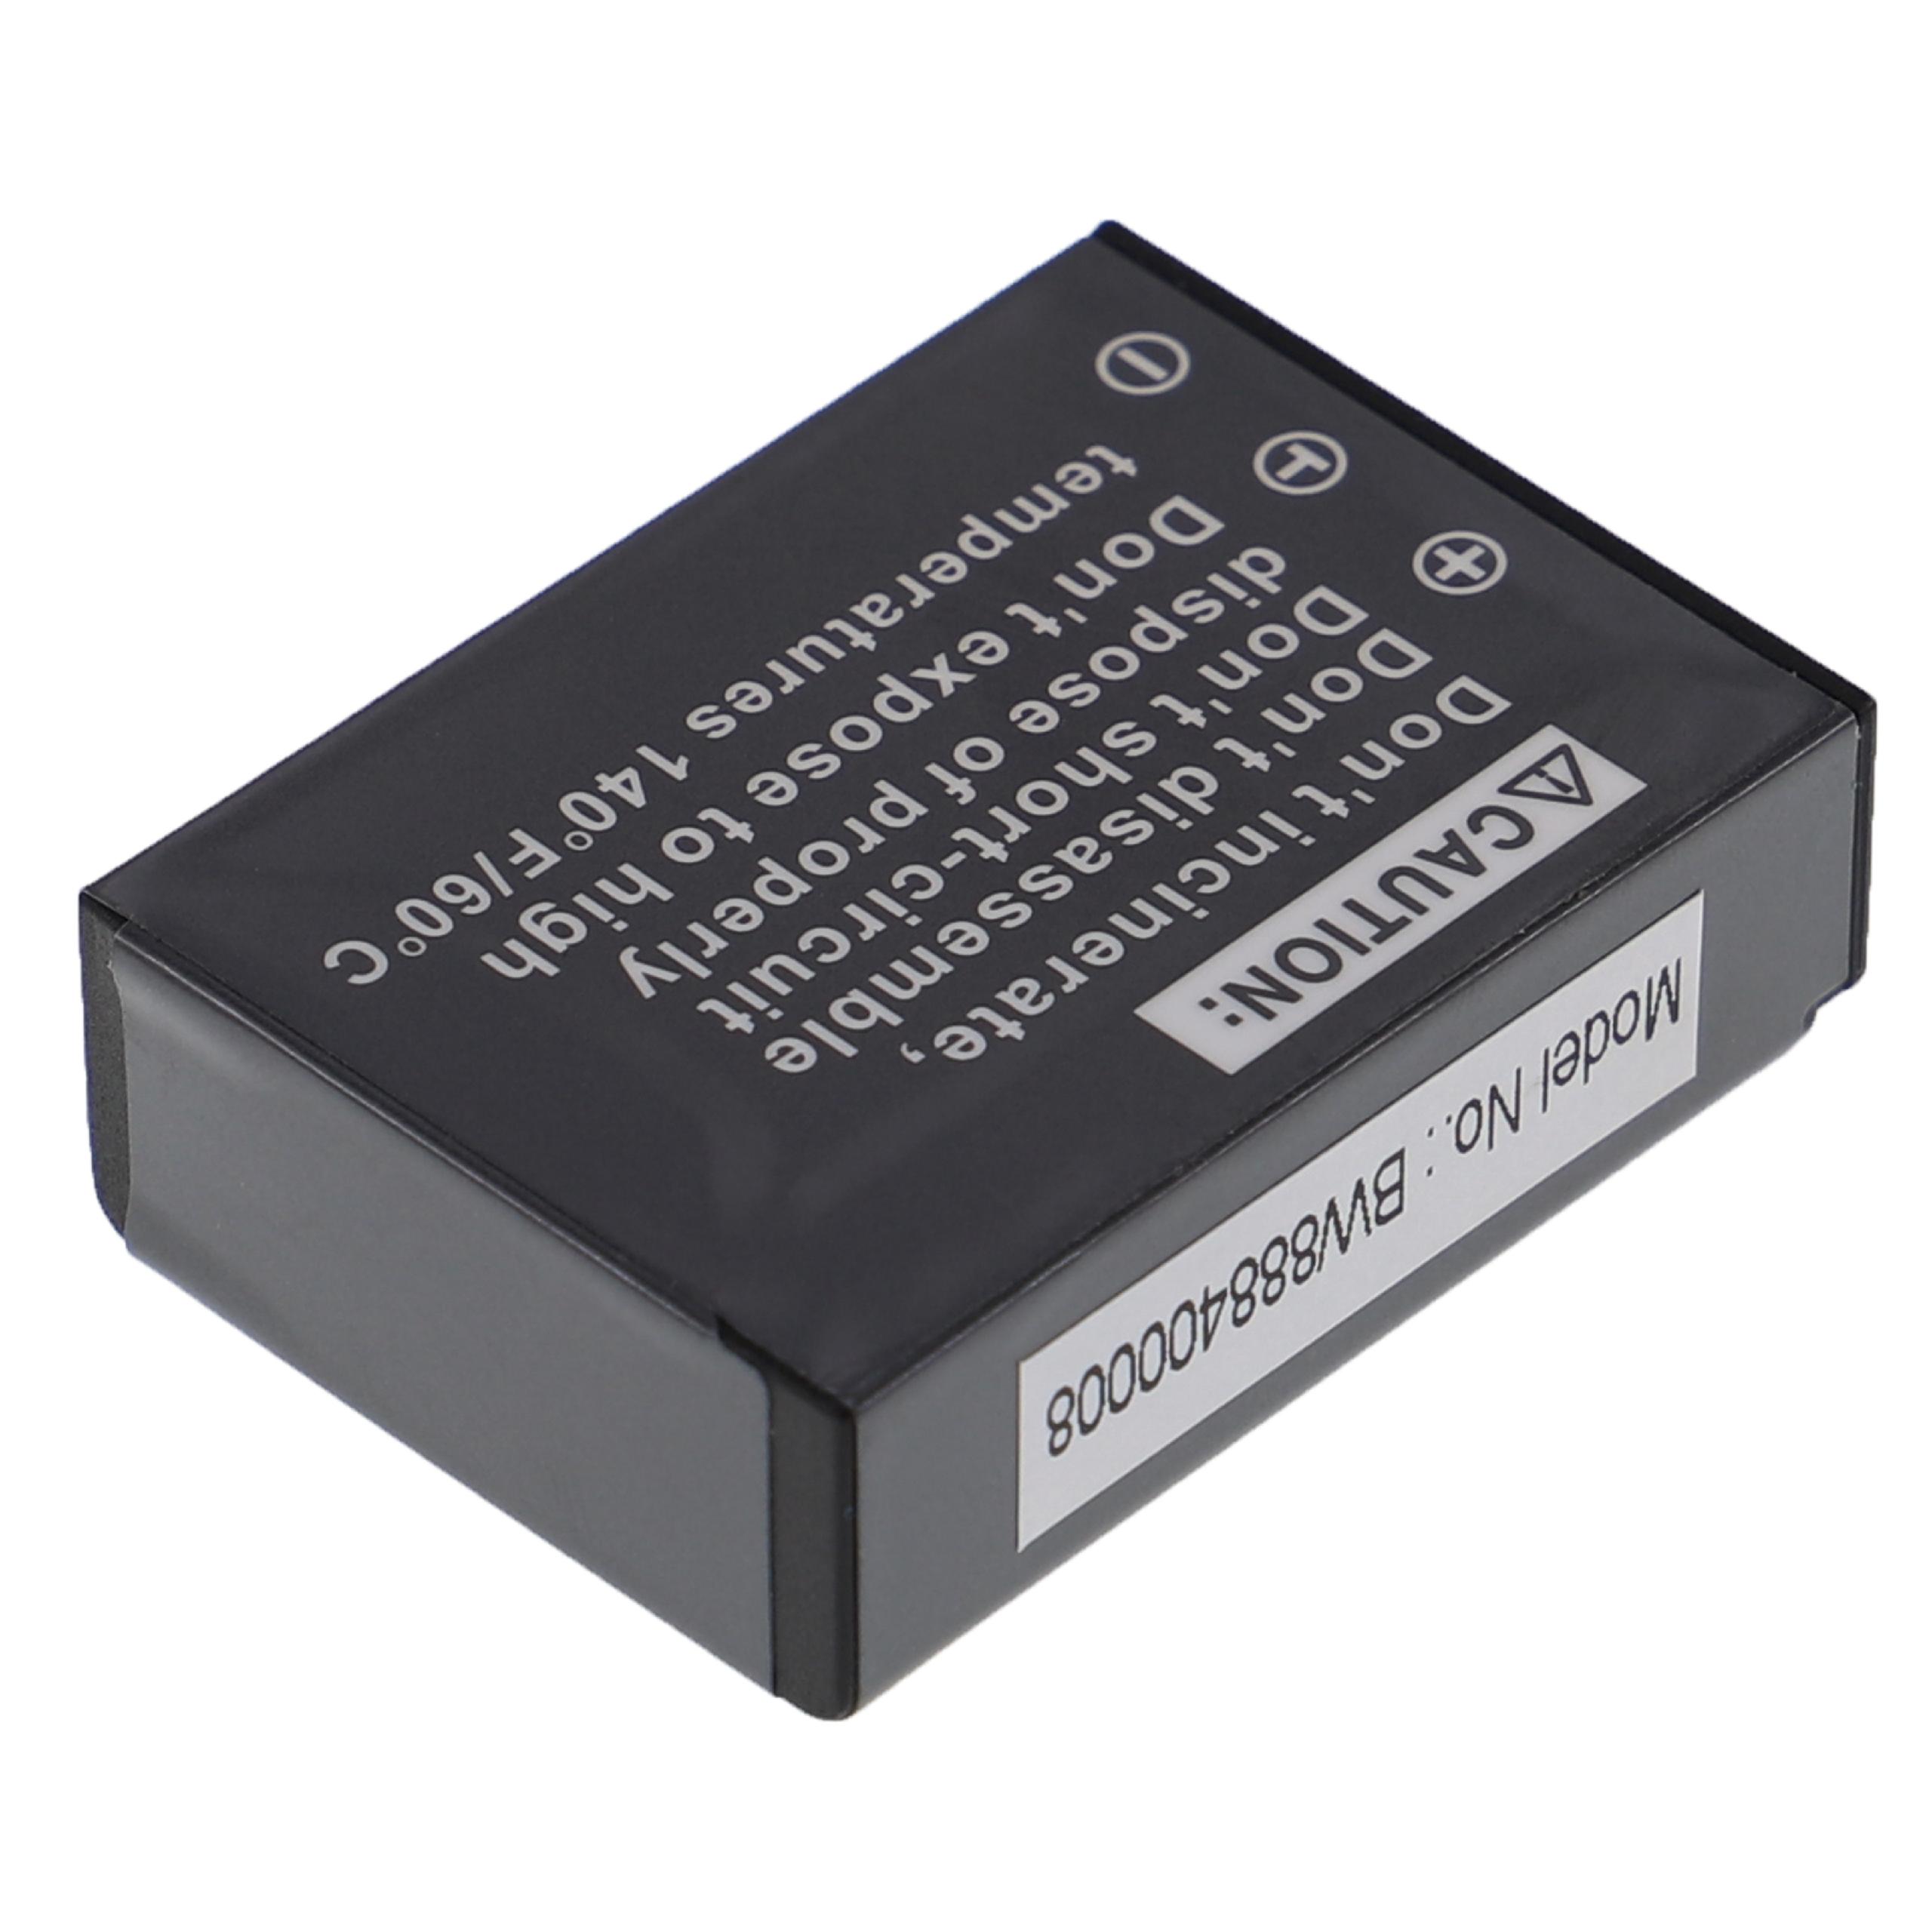 Batteria sostituisce Aiptek NP170, CB170, 084-07042L-062, CB-170 per fotocamera Toshiba - 1600mAh 3,6V Li-Ion